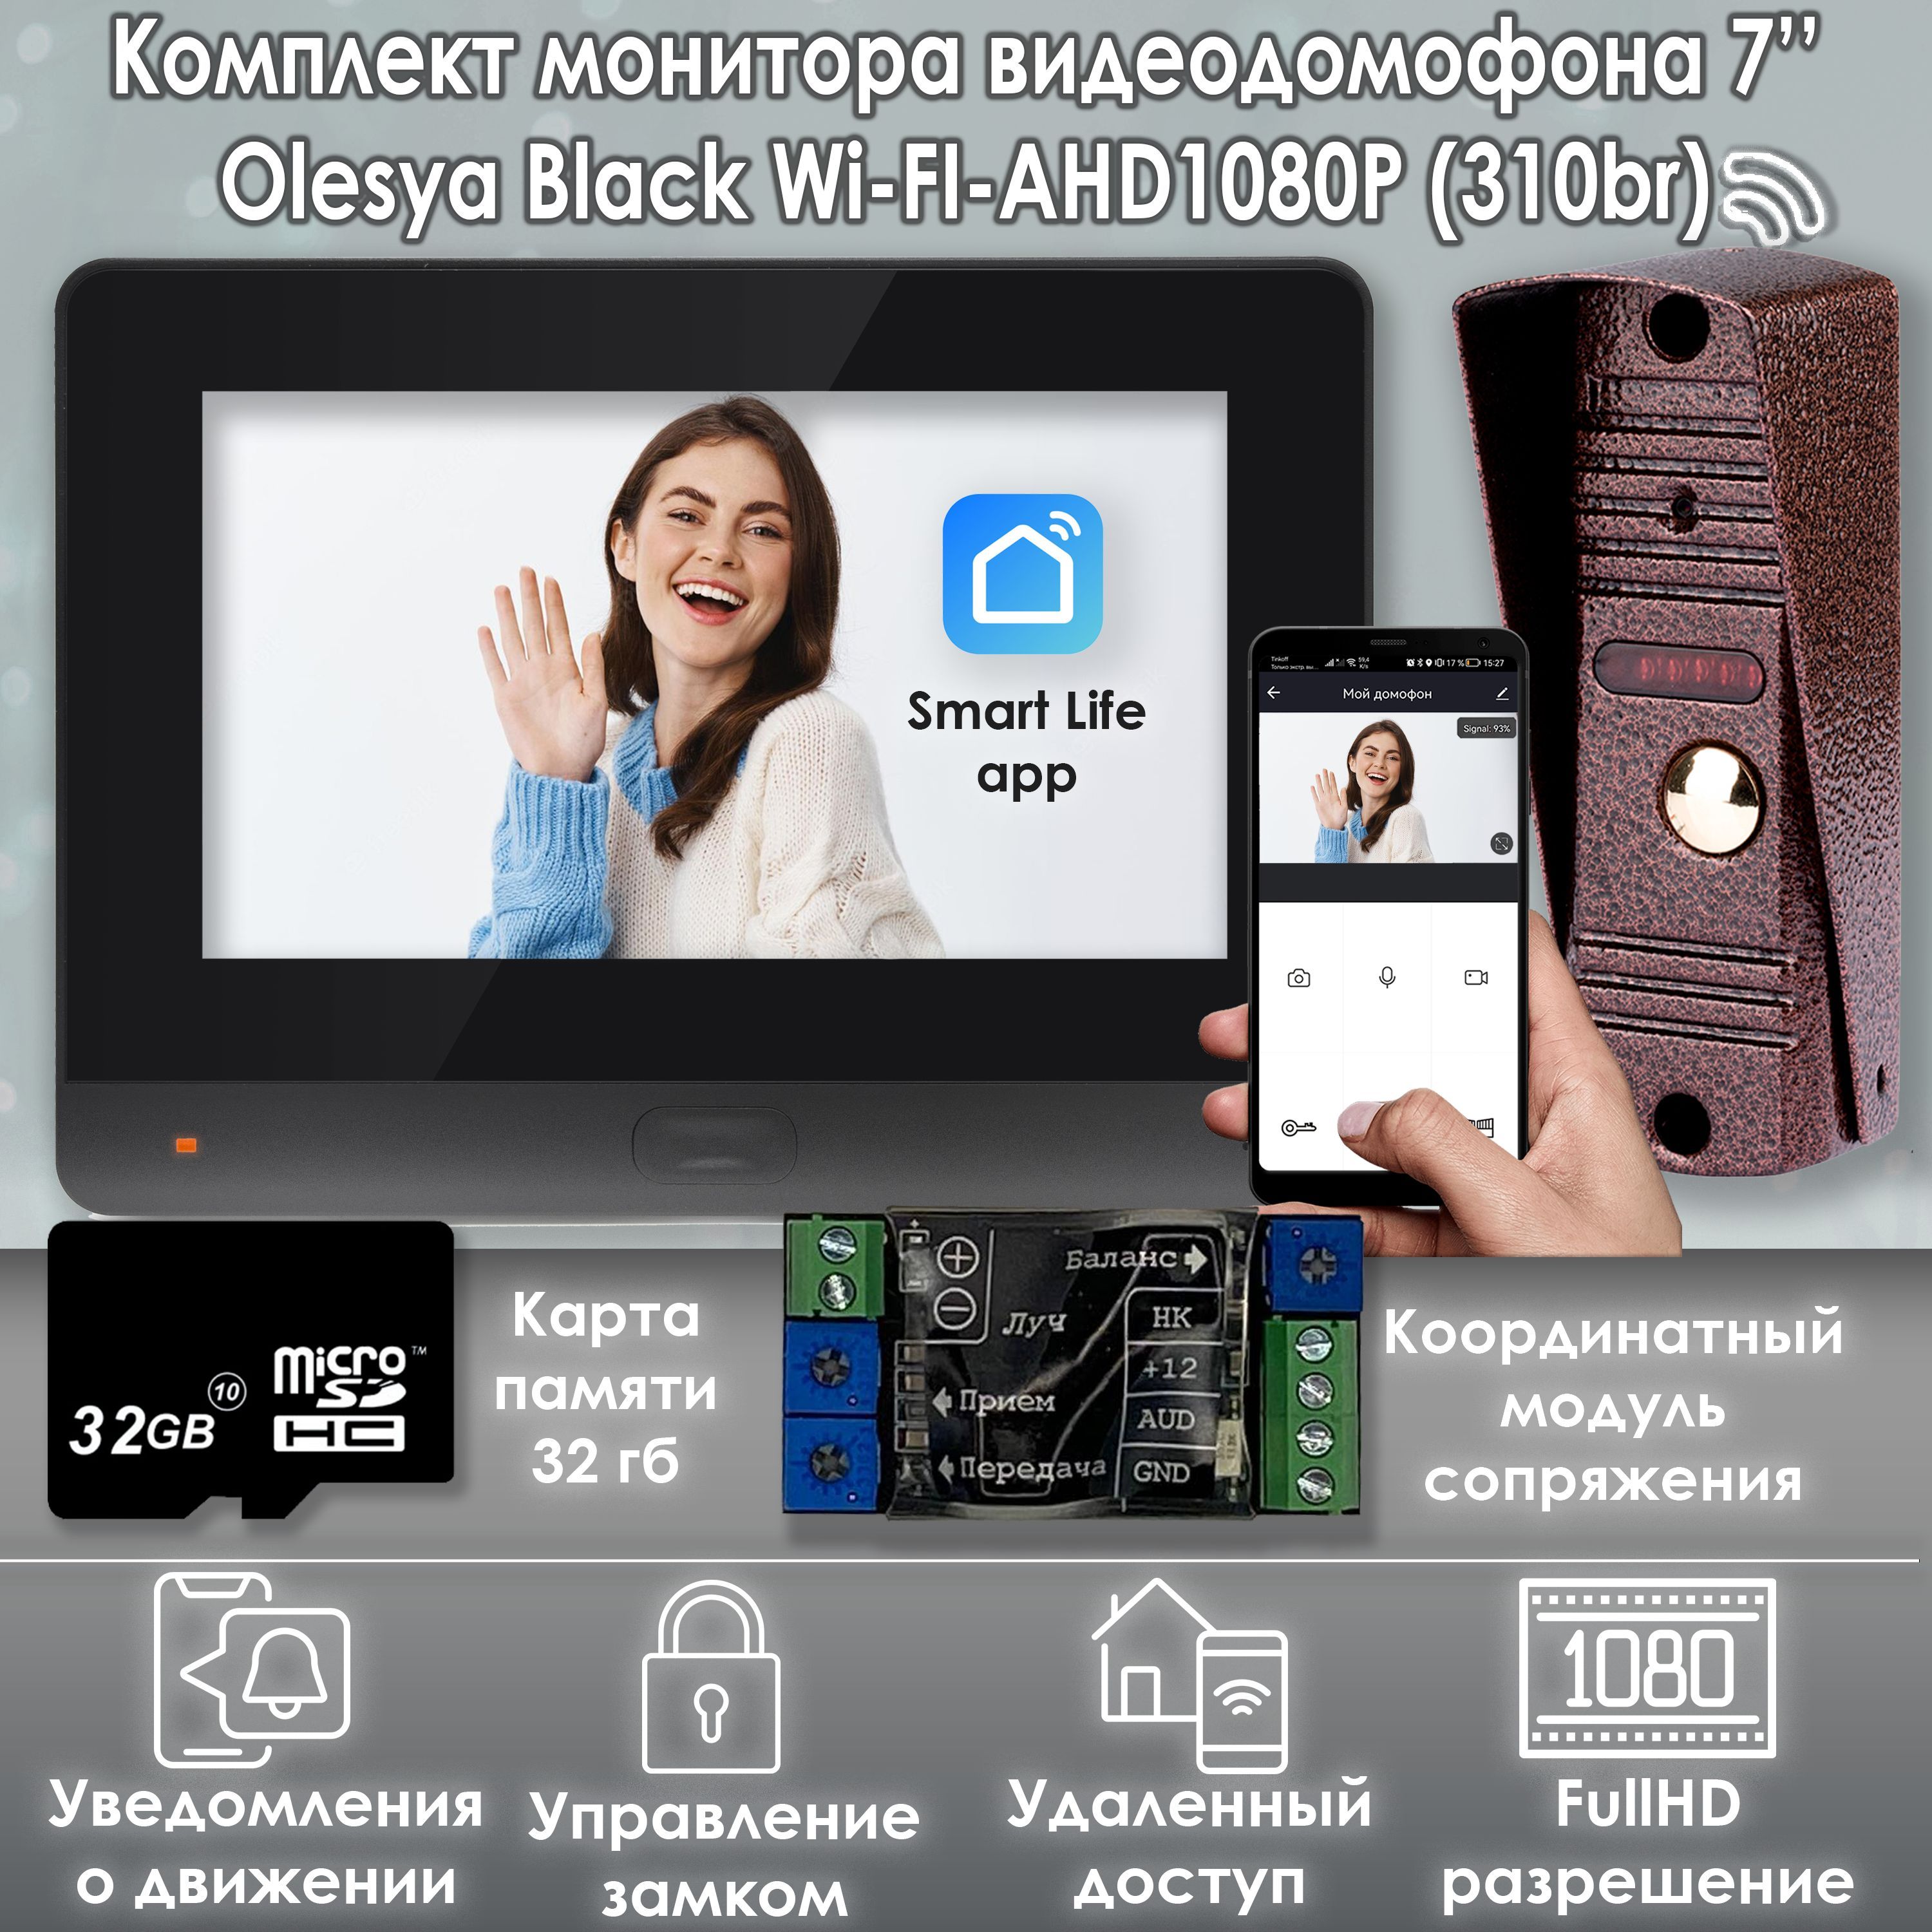 Комплект видеодомофона Alfavision Olesya Wi-Fi AHD1080P Full HD (310br), Черный oxalis full arm кресло